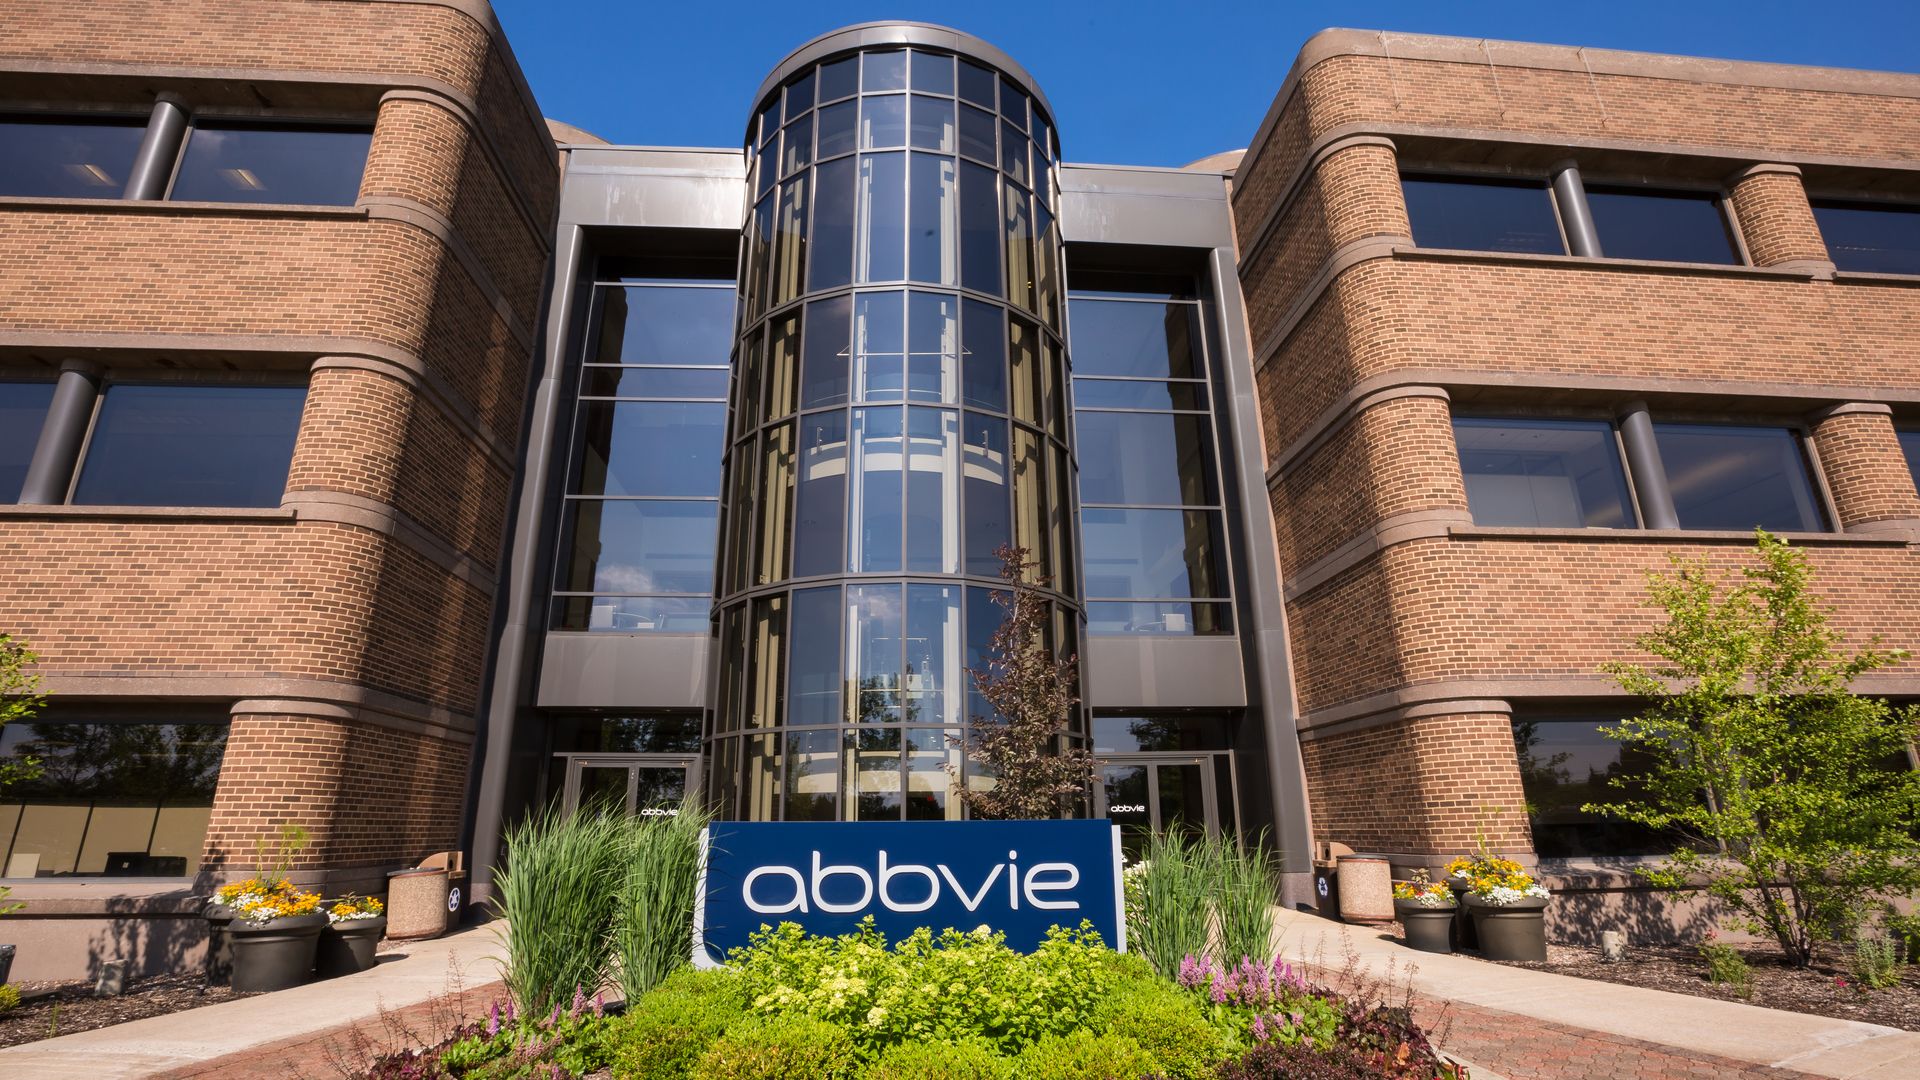 AbbVie headquarters building in Illinois.